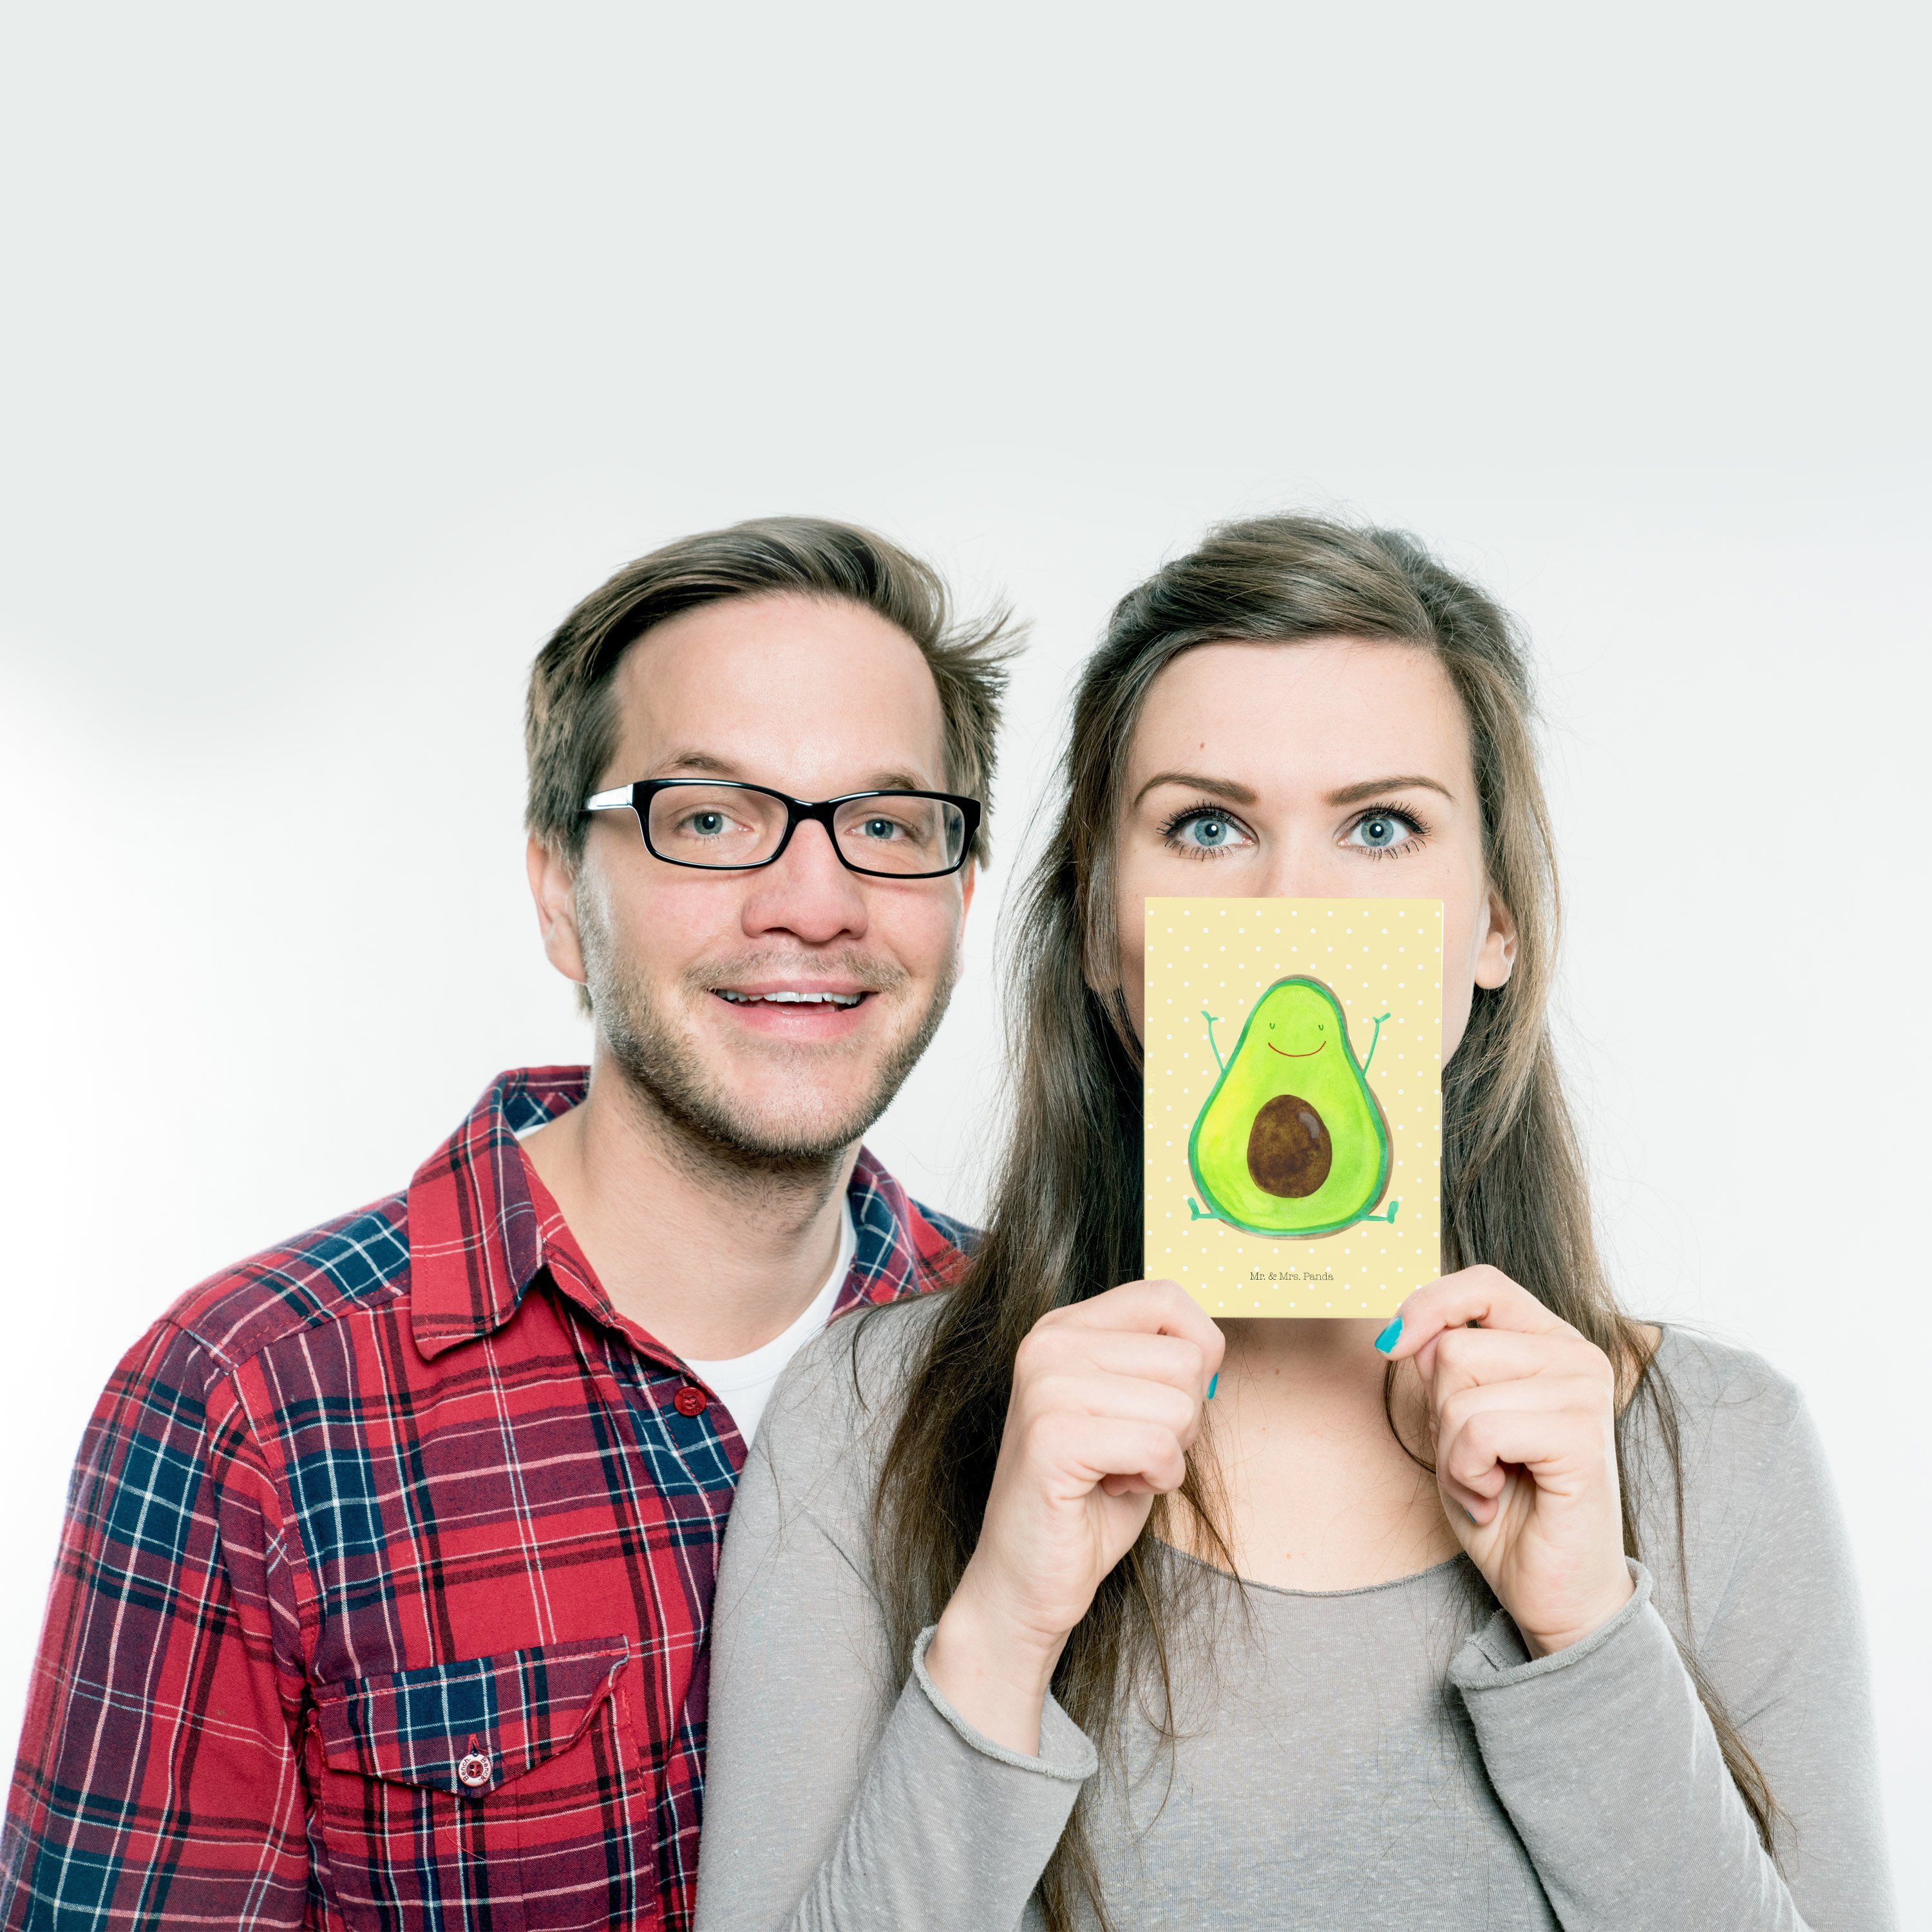 Mr. & Mrs. Pastell Happy Avocado gl Veggie, Postkarte Panda - Geburtstagskarte, Gelb - Geschenk